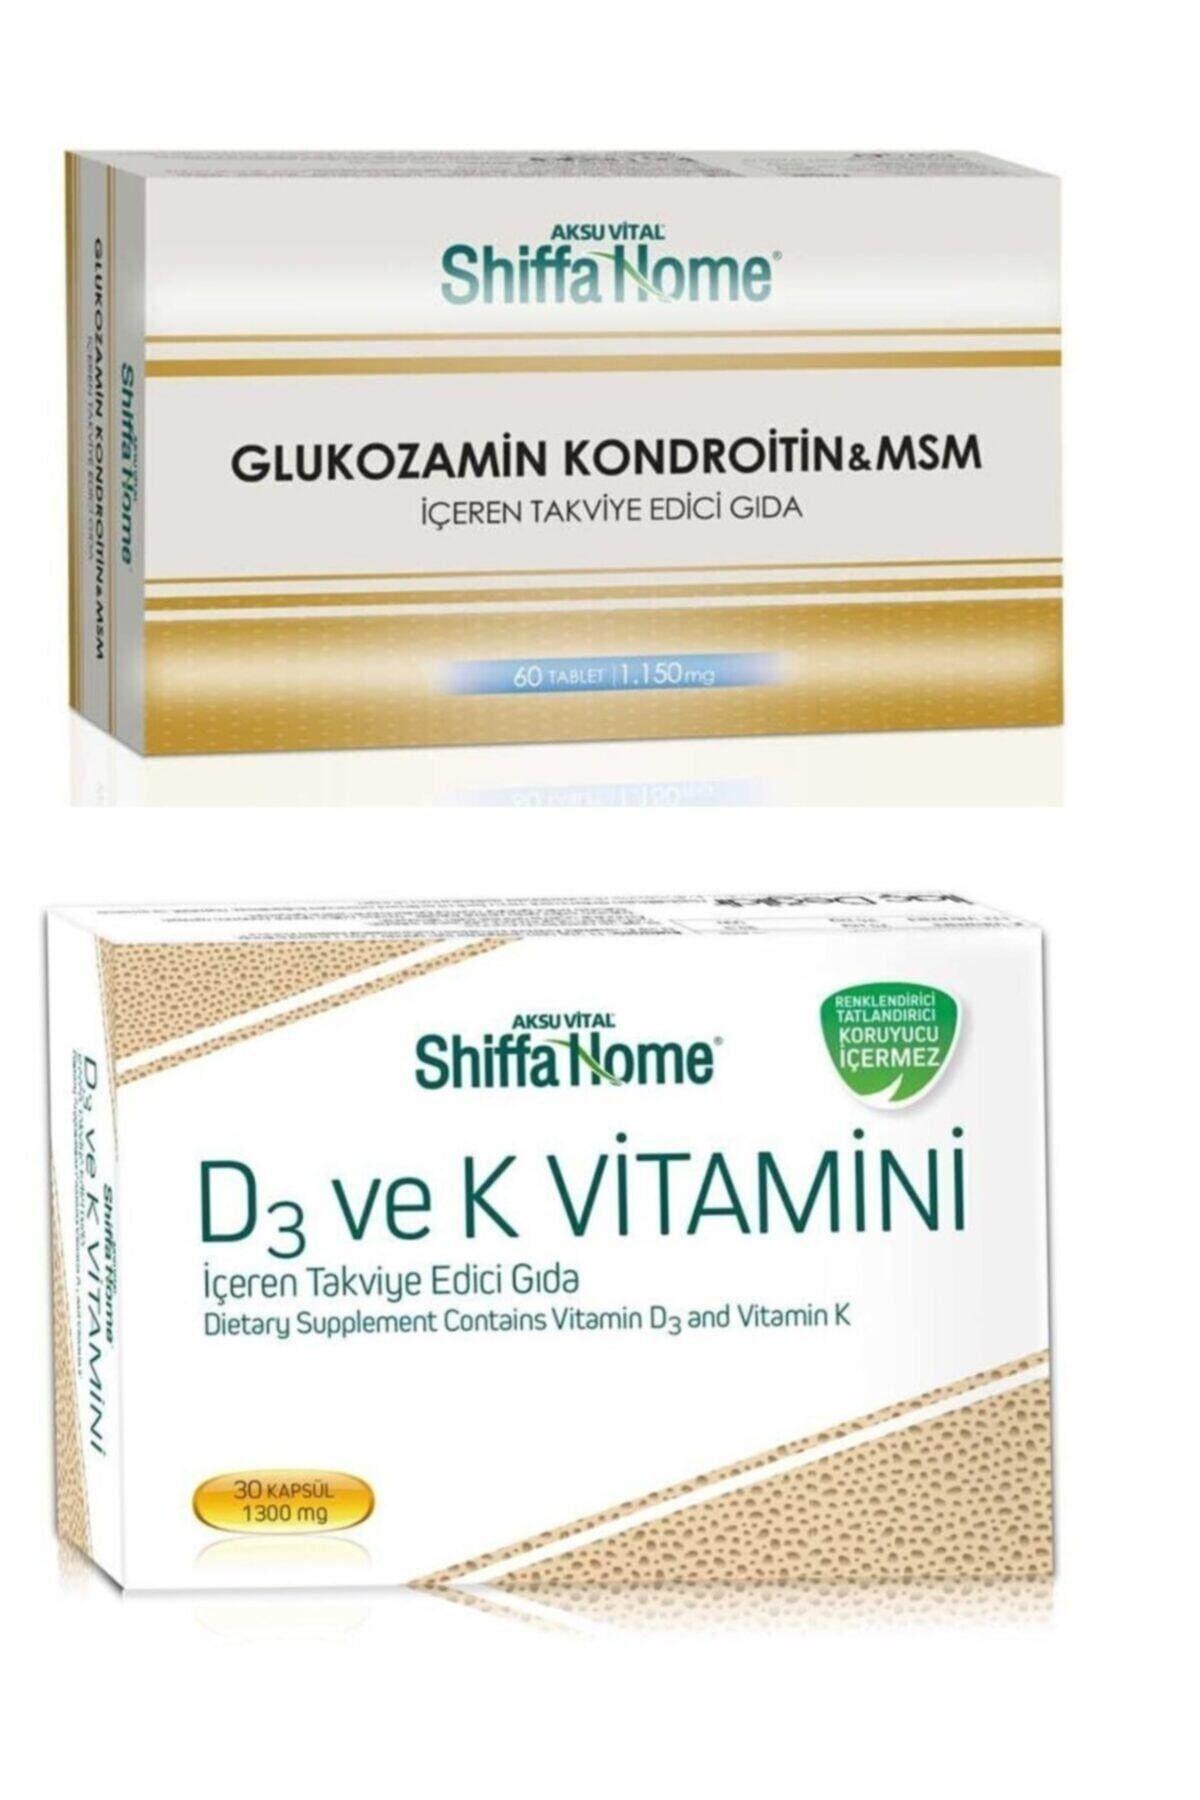 Aksu Vital Glukozamin Kondroitin Msm 1150 Mg 60 Tablet & D3 Ve K Vitamini